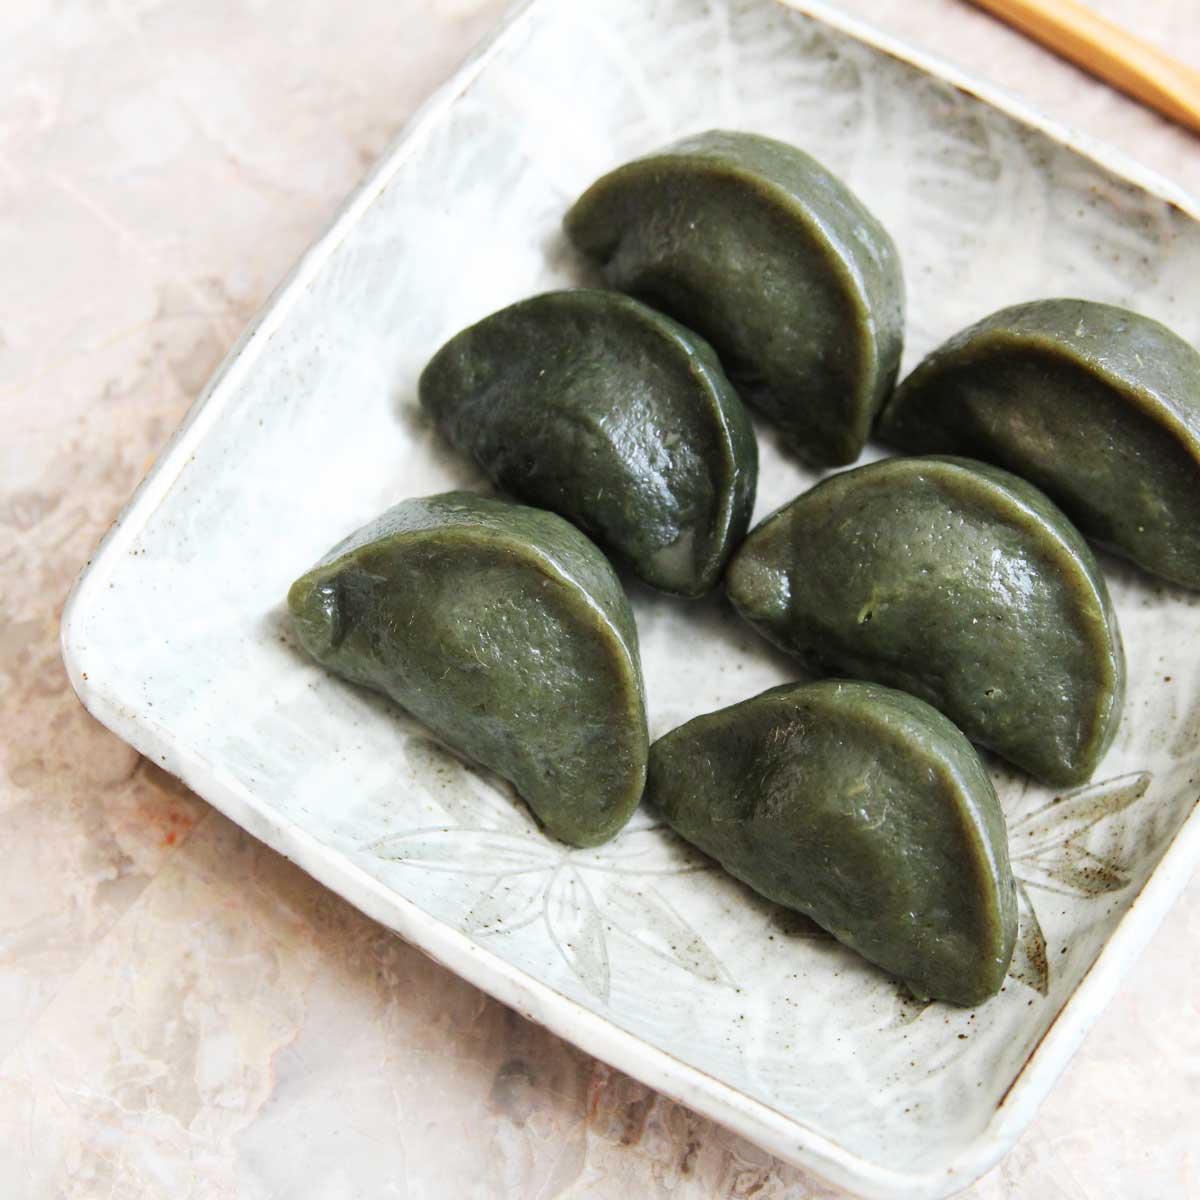 Healthier Mugwort Songpyeon made with Sweet Potatoes (고구마 쑥송편) - Tang Yuan Fillings